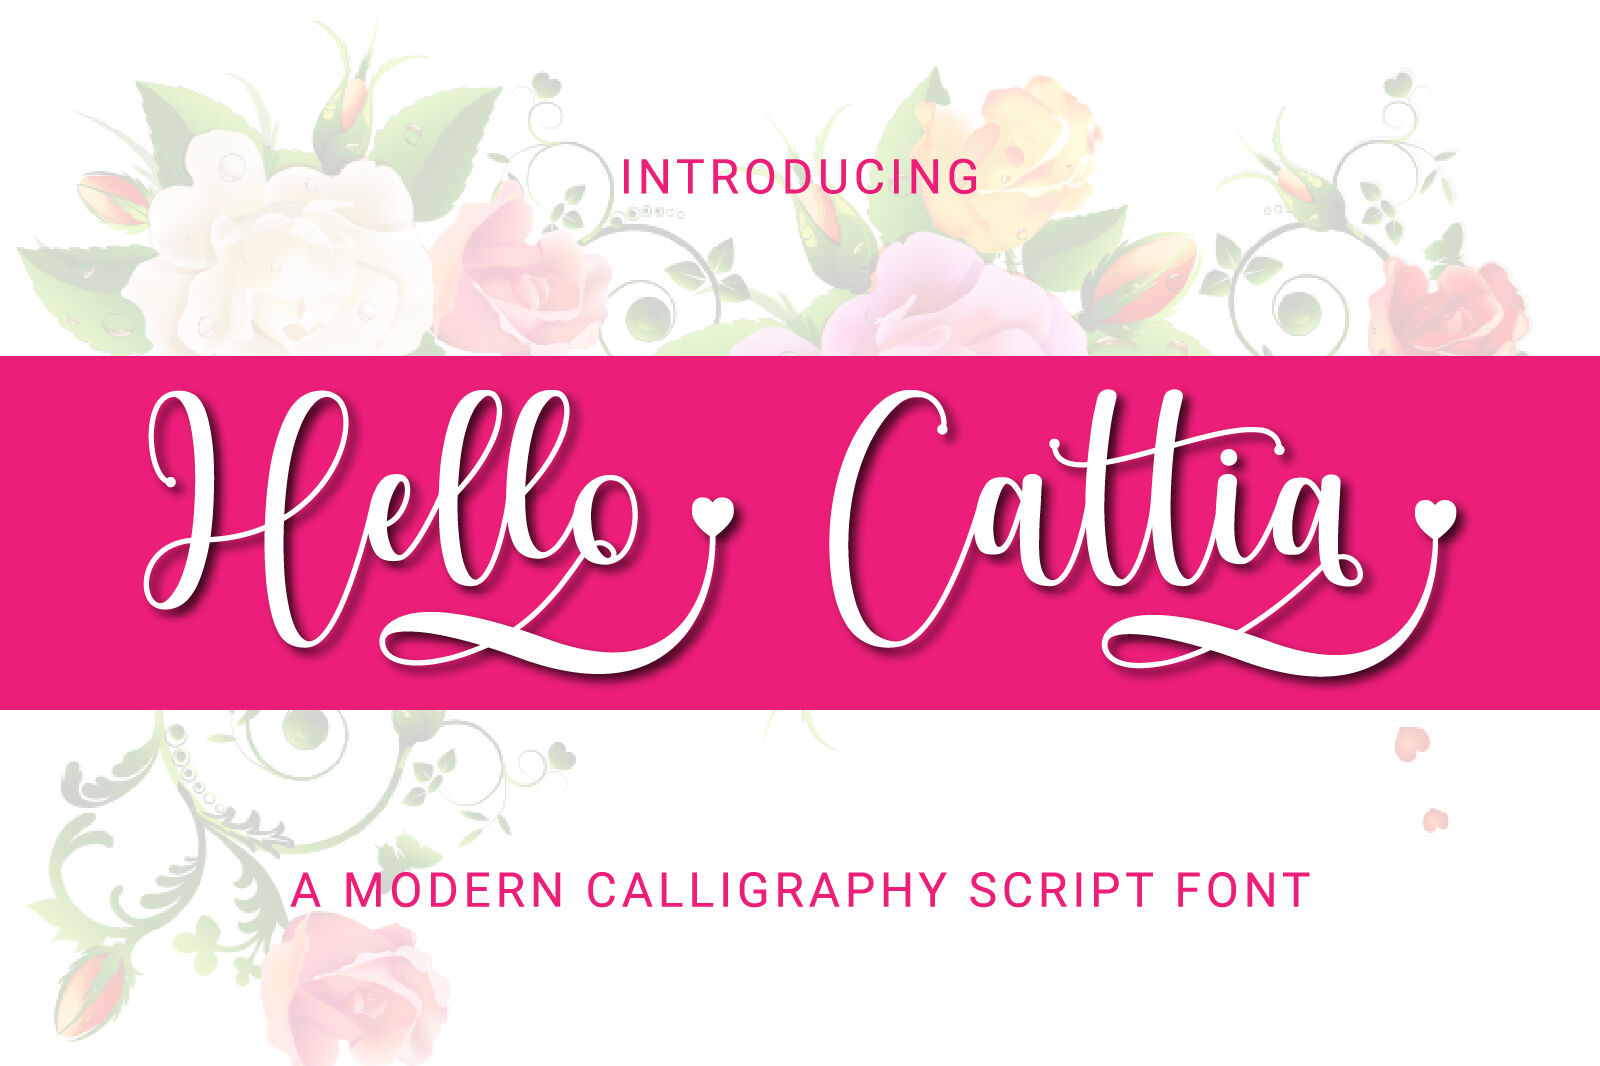 Hello Cattia By Jprint Design And Printing Thehungryjpeg Com